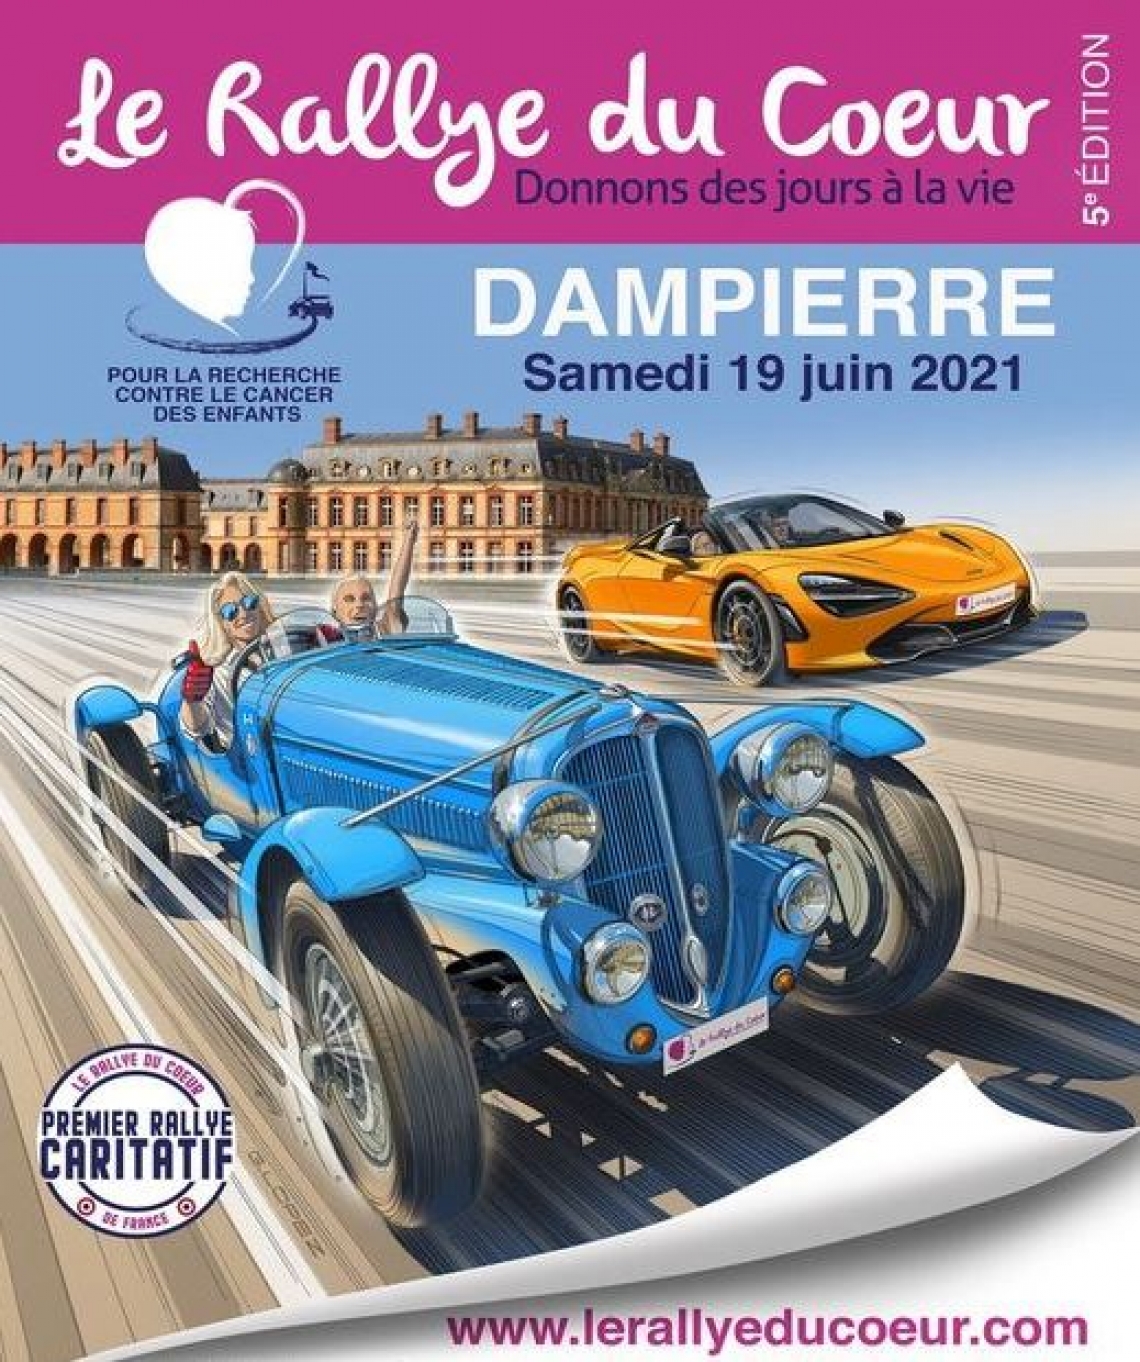 Rallye du cœur de Versailles - Edition 2020